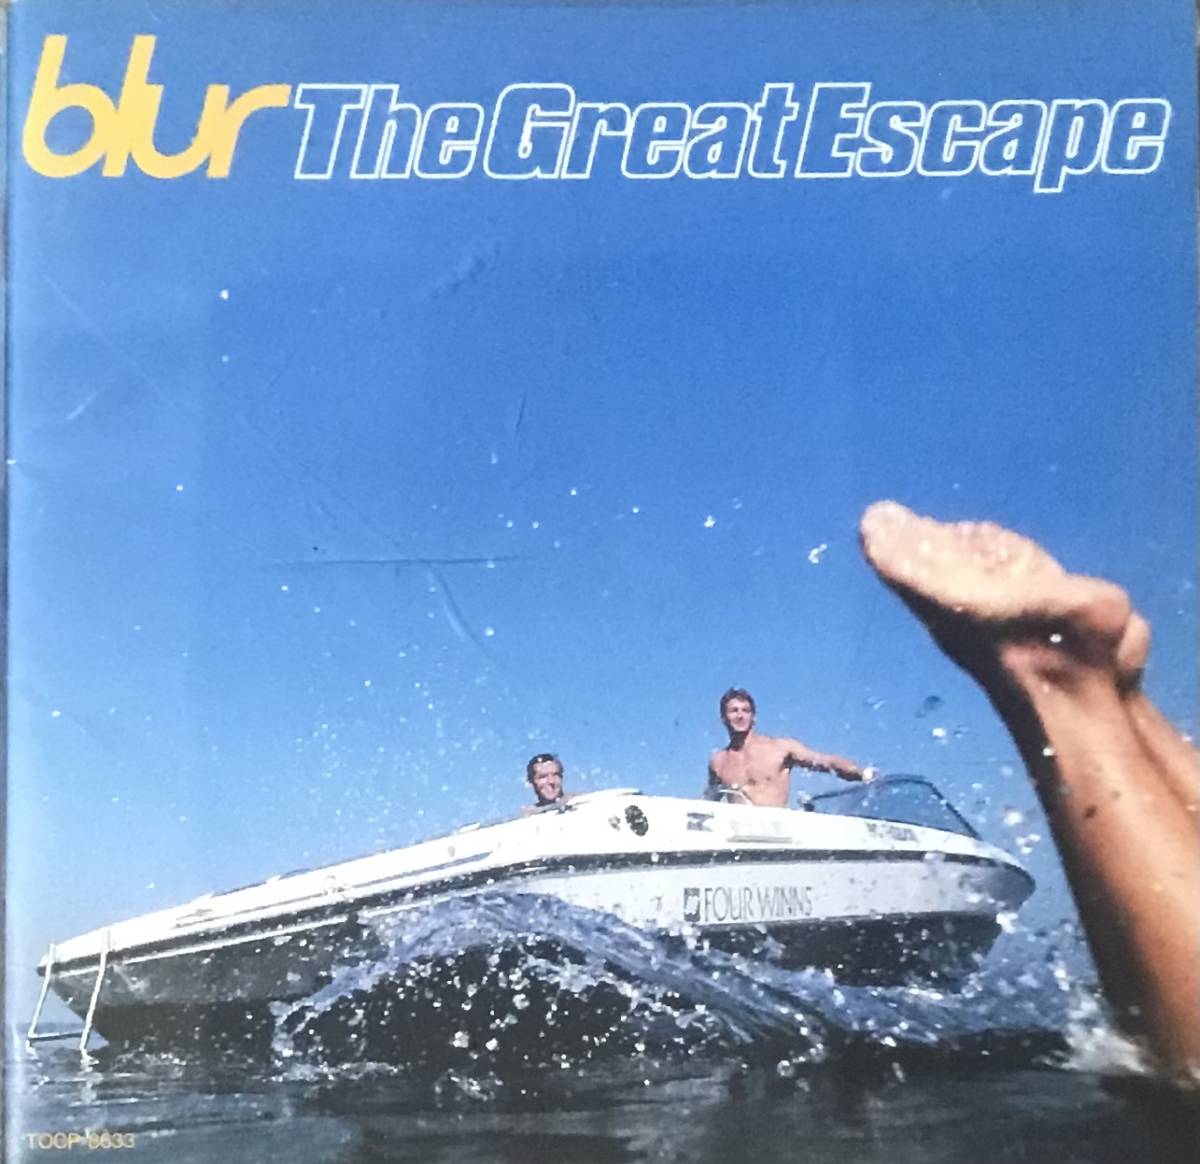 [ CD ] Blur / The Great Escape ( Rock ) EMI блокировка название запись 